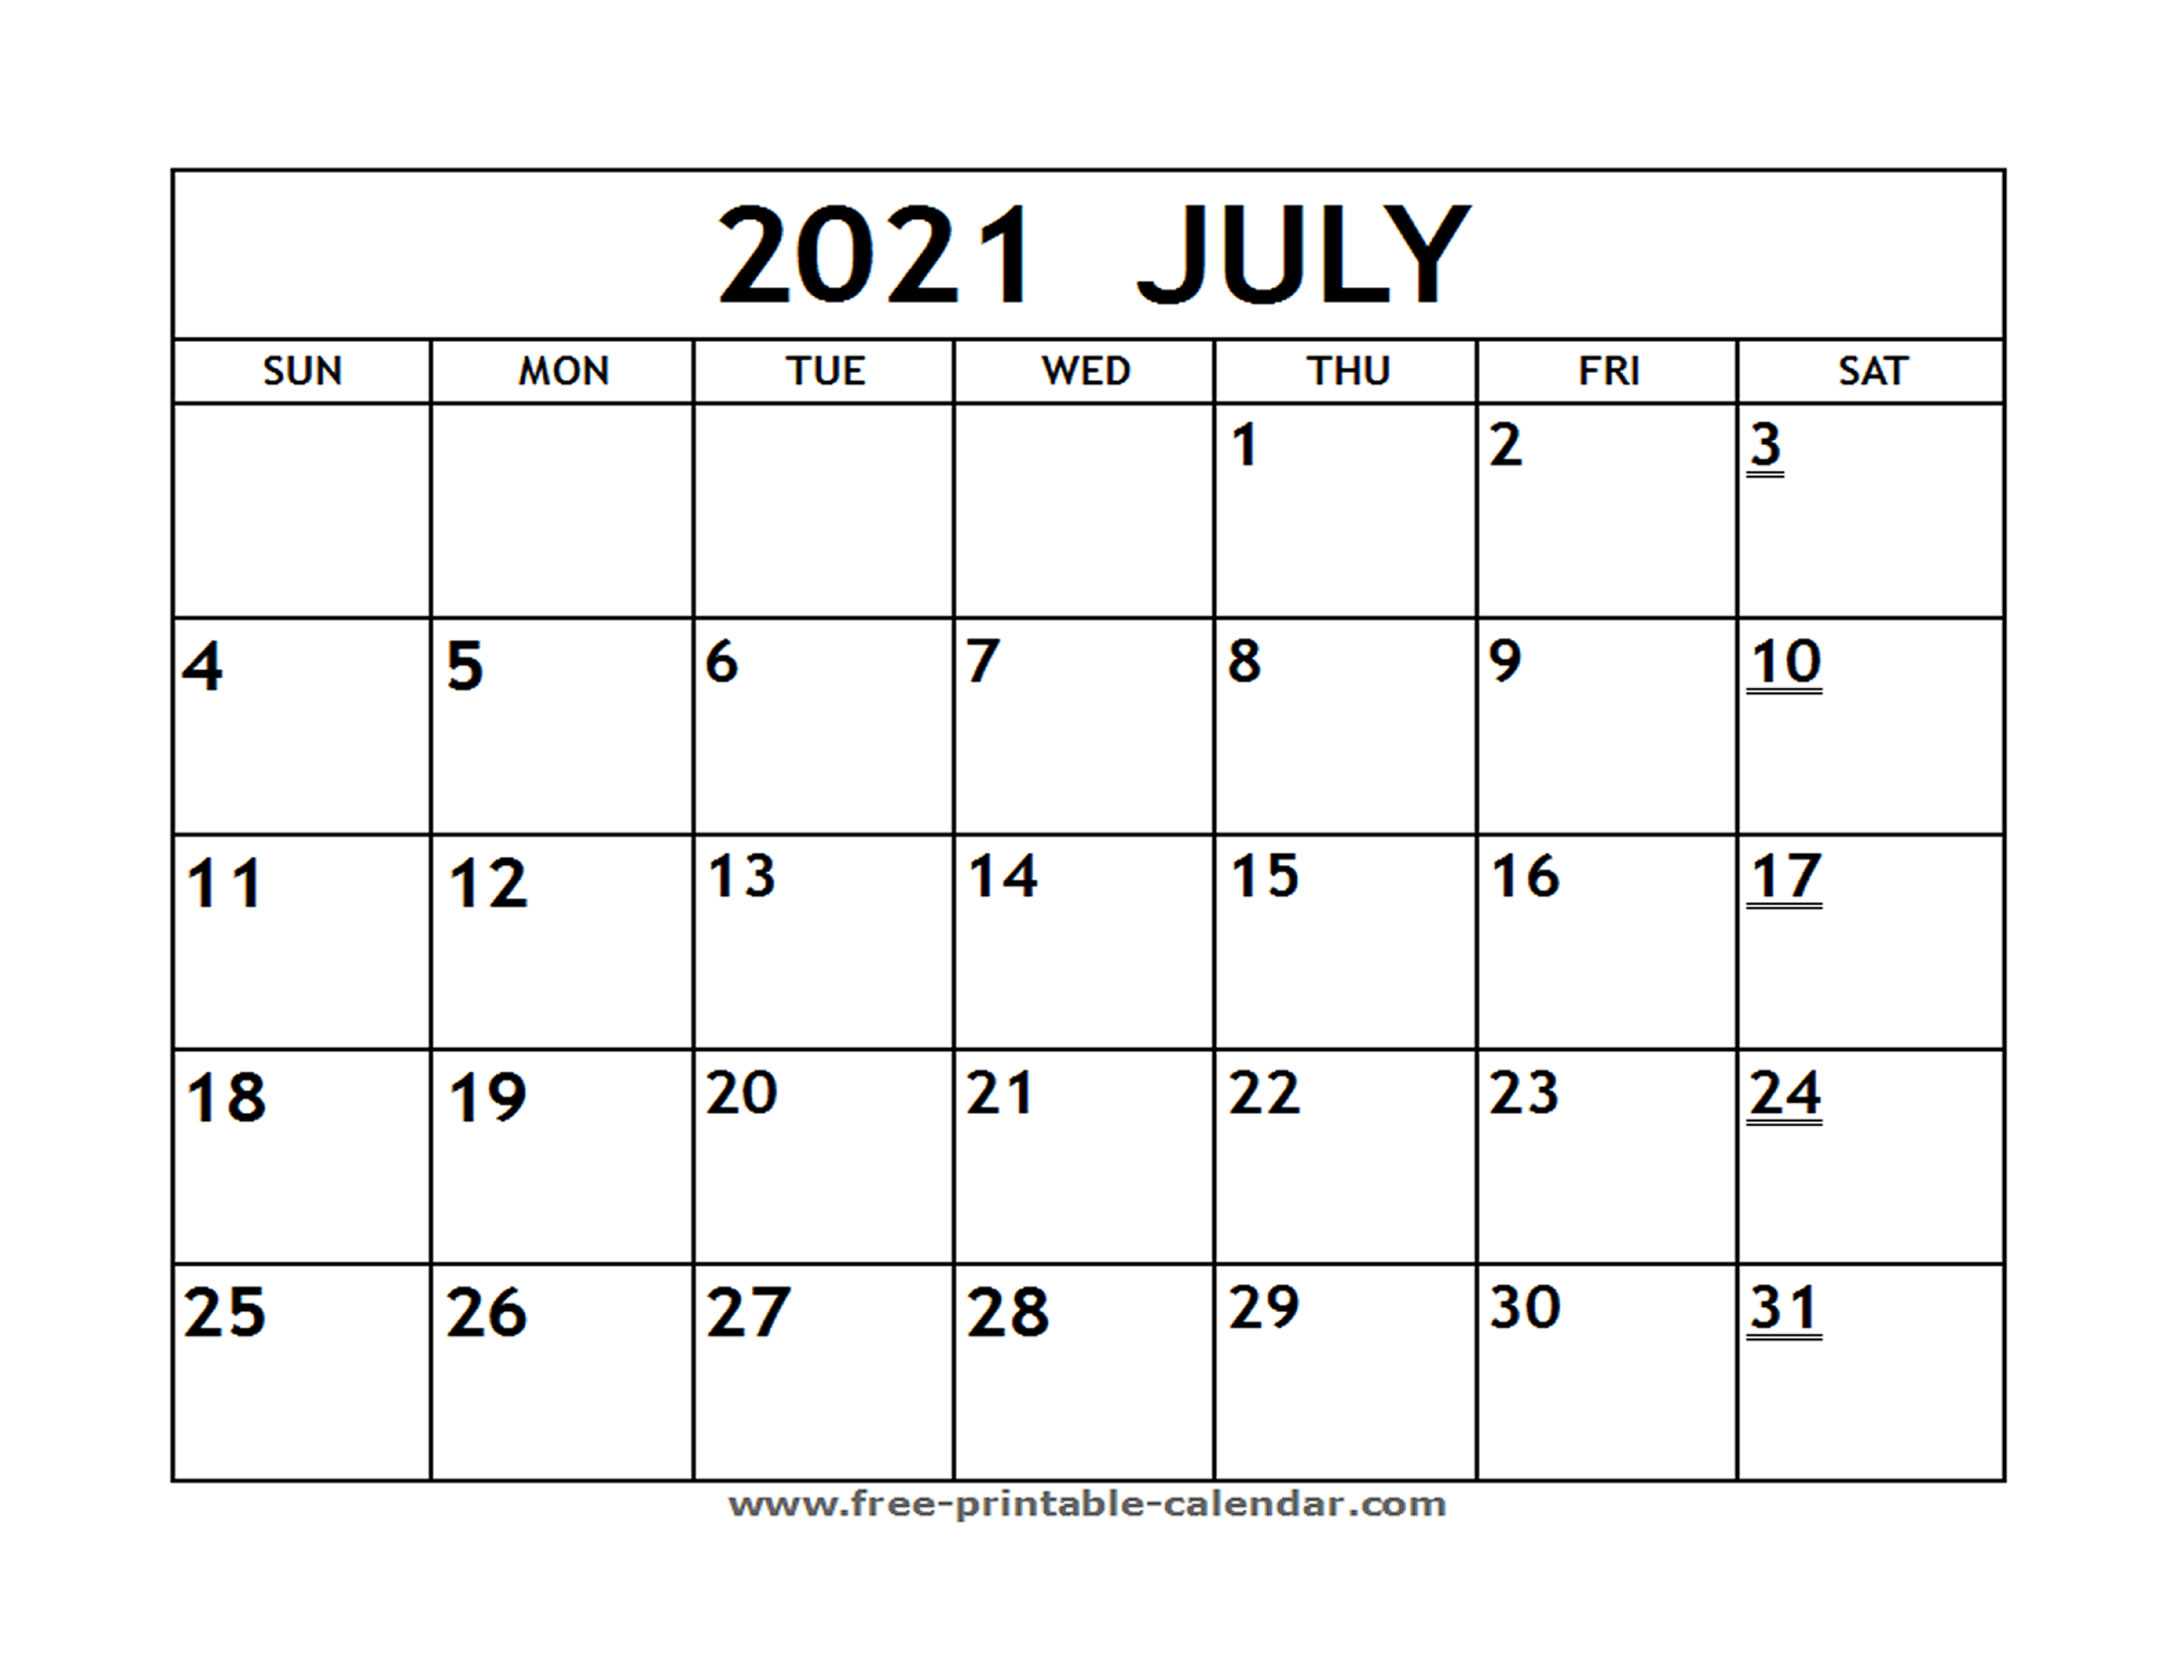 Printable 2021 July Calendar - Free-Printable-Calendar